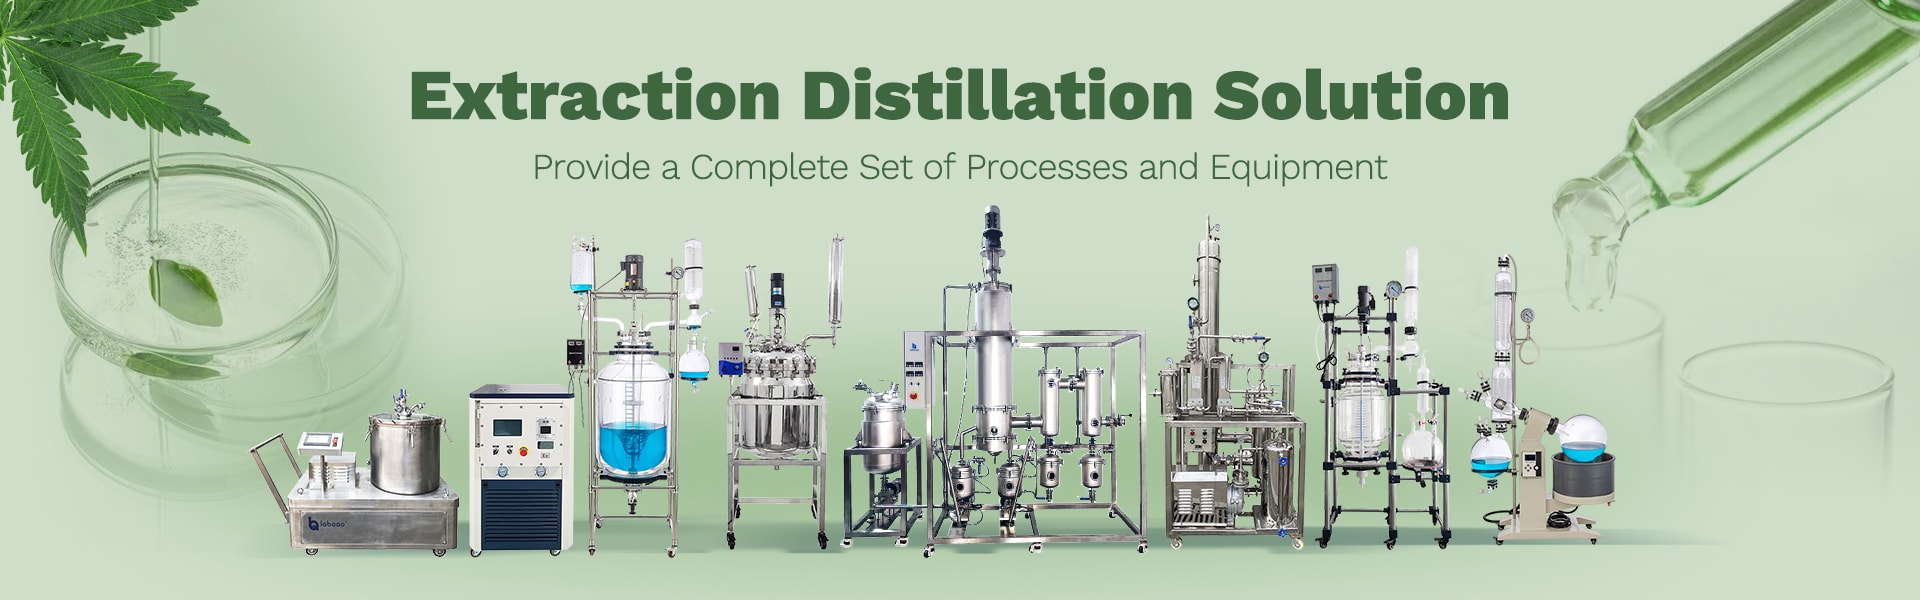 banner of extraction distillation equipment